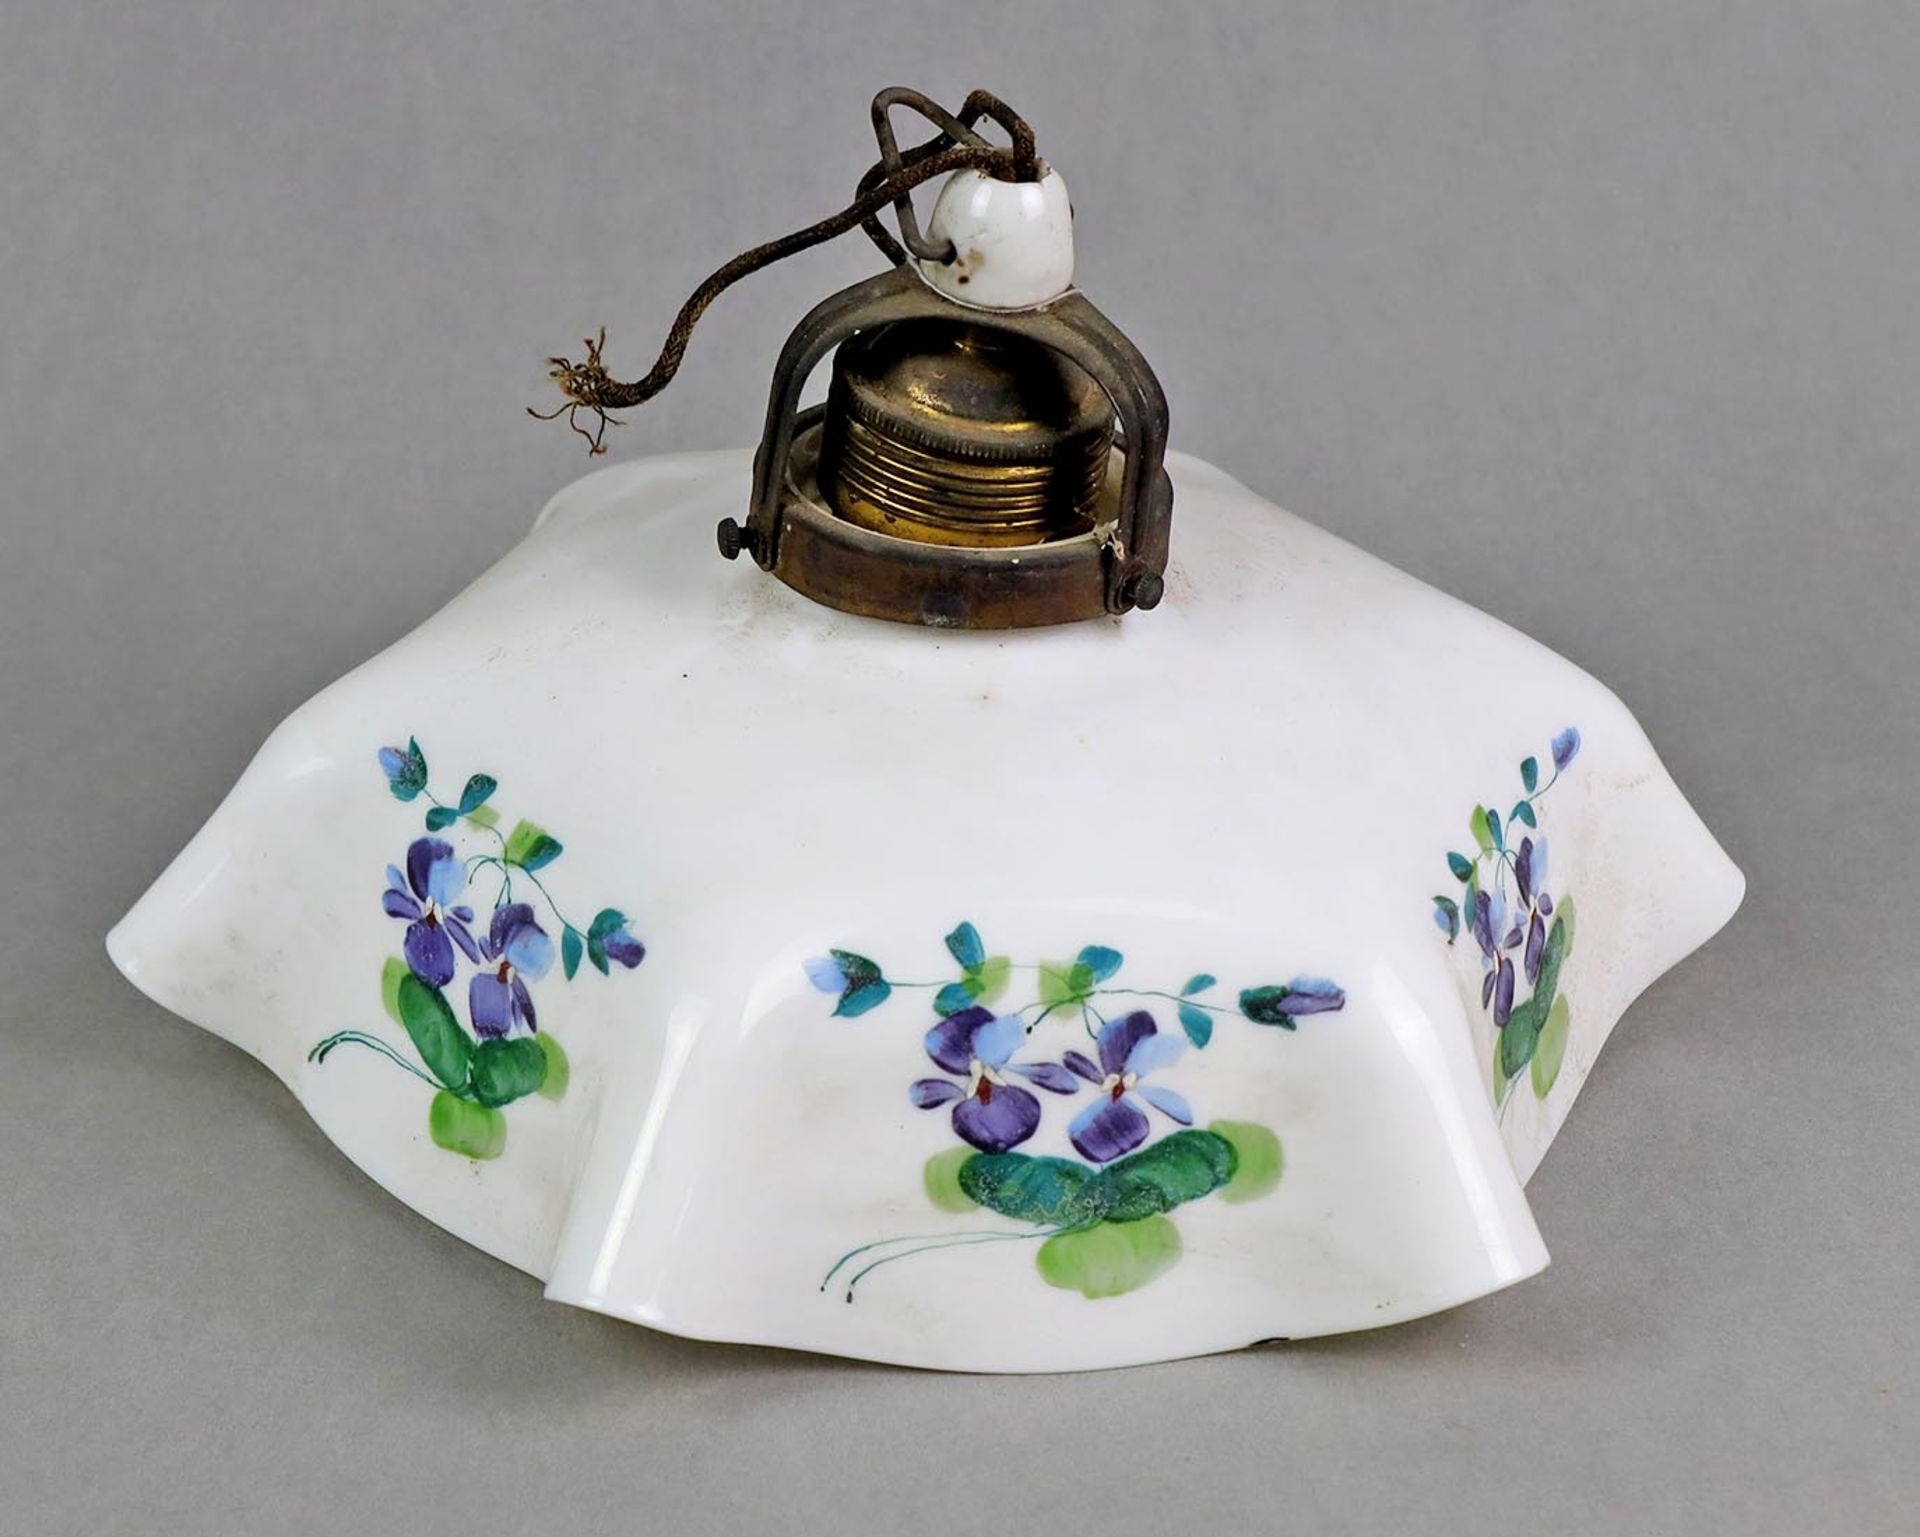 Jugendstil Deckenlampe um 1910weiß opaker Faltenglas Lampenschirm mit Jugendstil Blüten handmalerei,